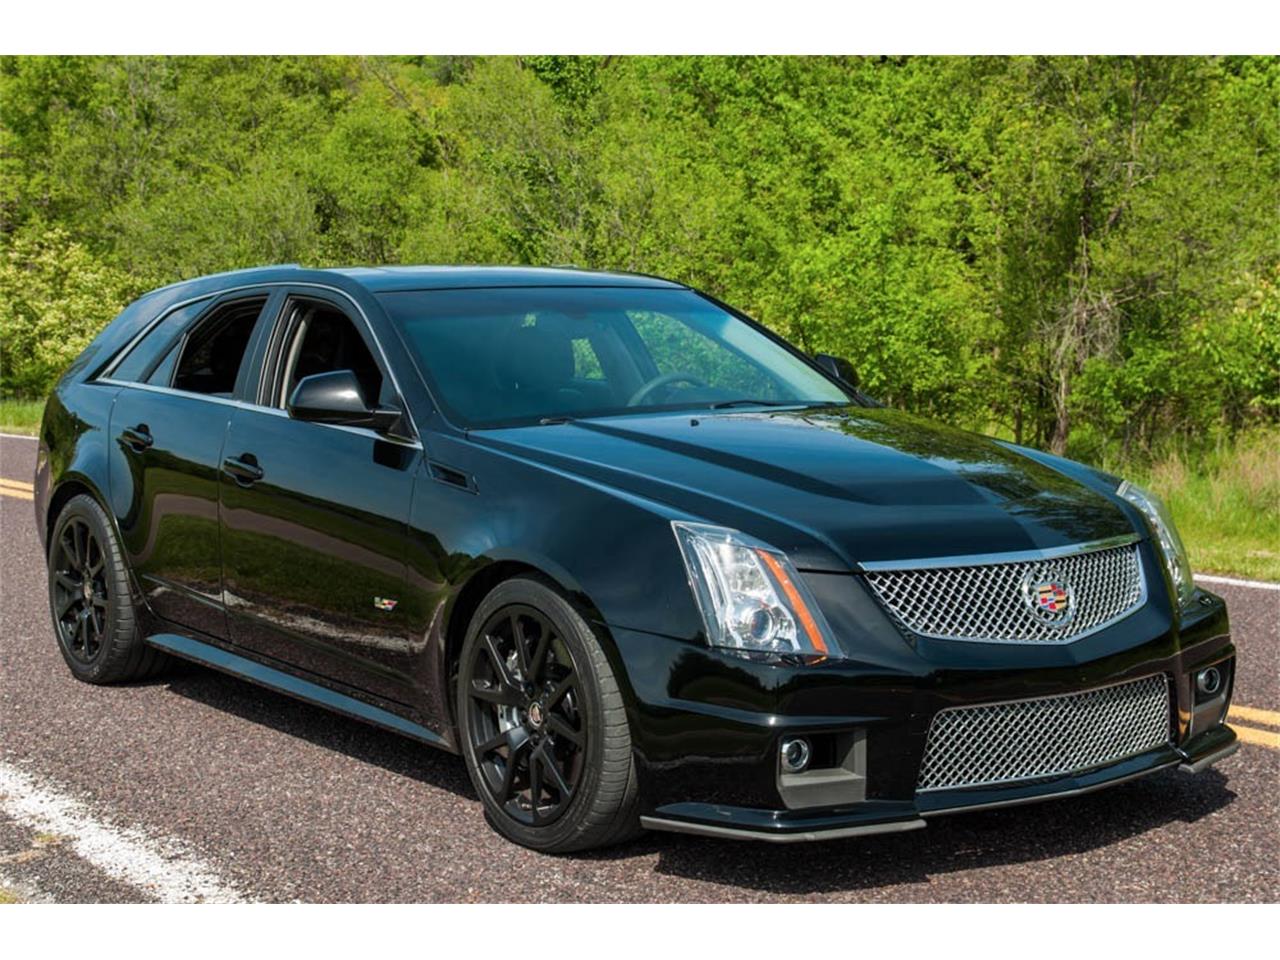 2012 Cadillac CTS-V for Sale | ClassicCars.com | CC-1015788